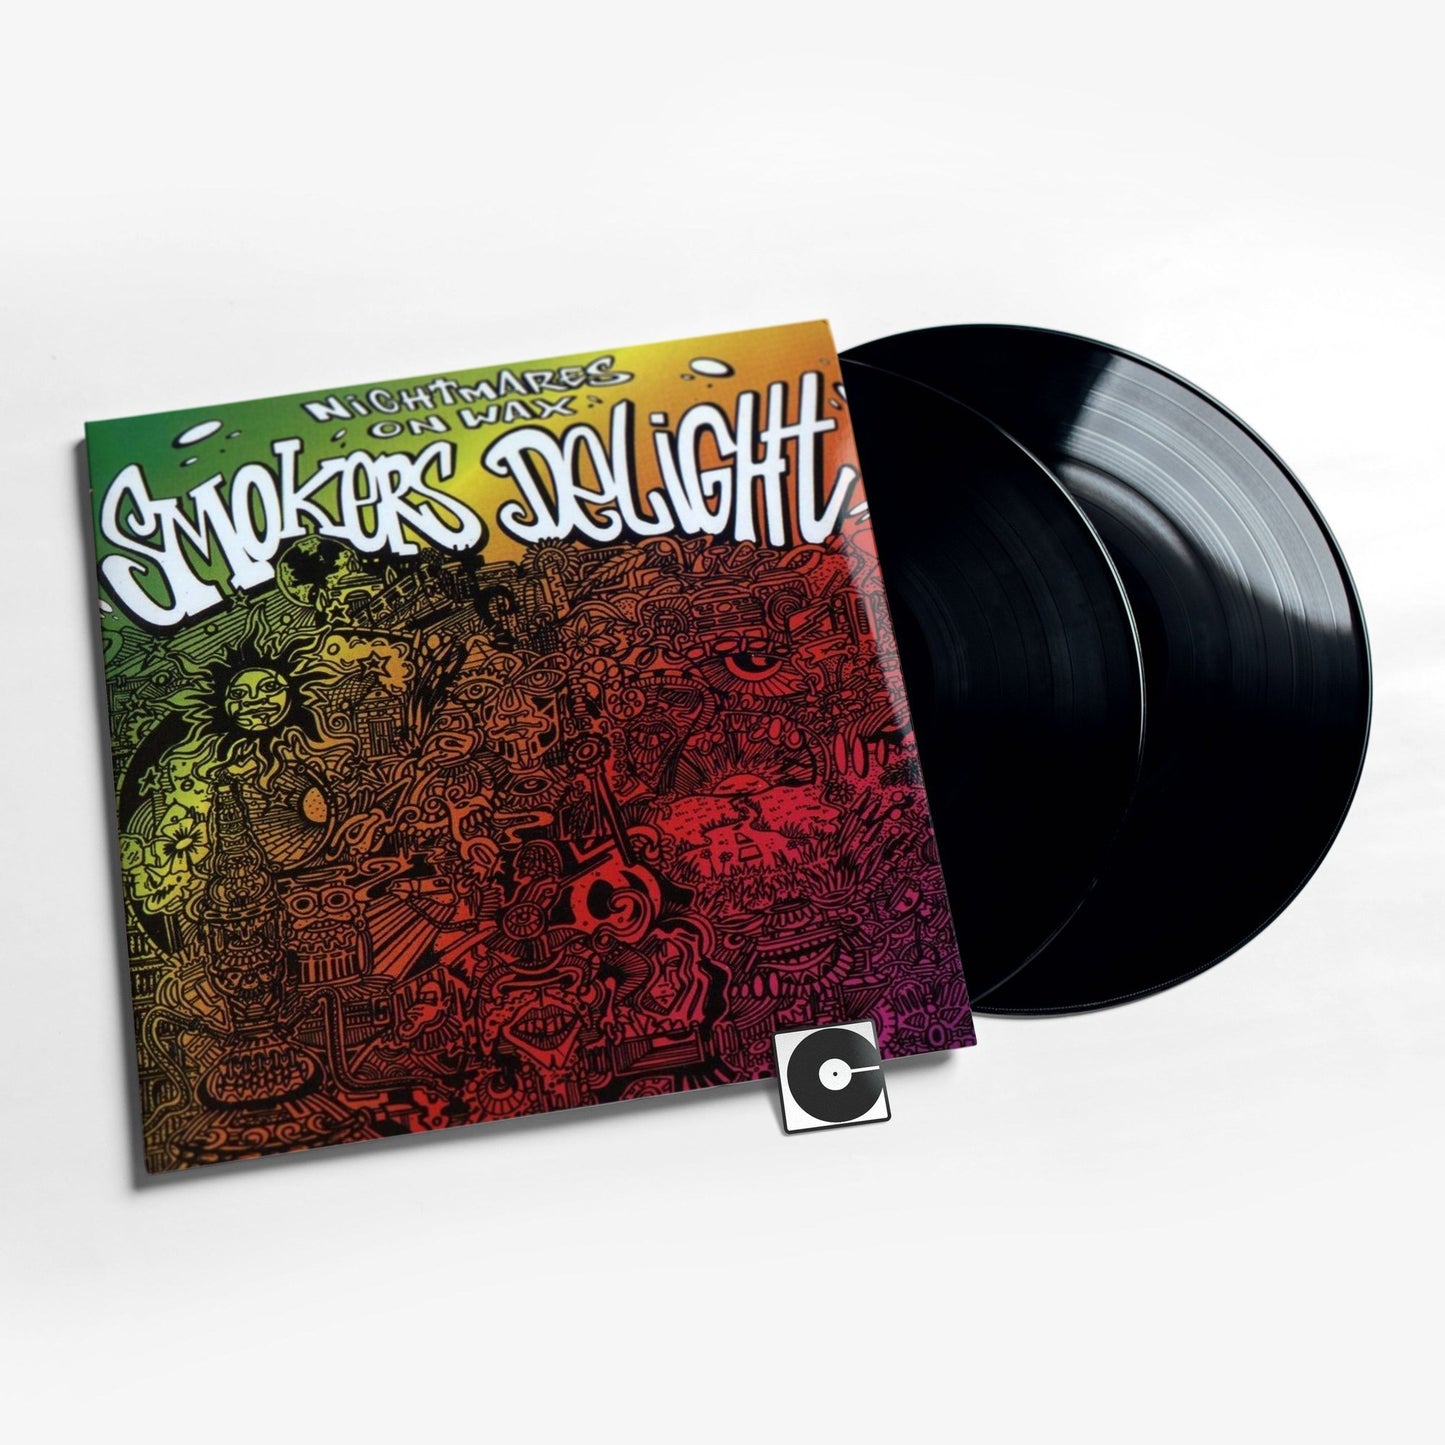 Nightmares On Wax - "Smokers Delight"